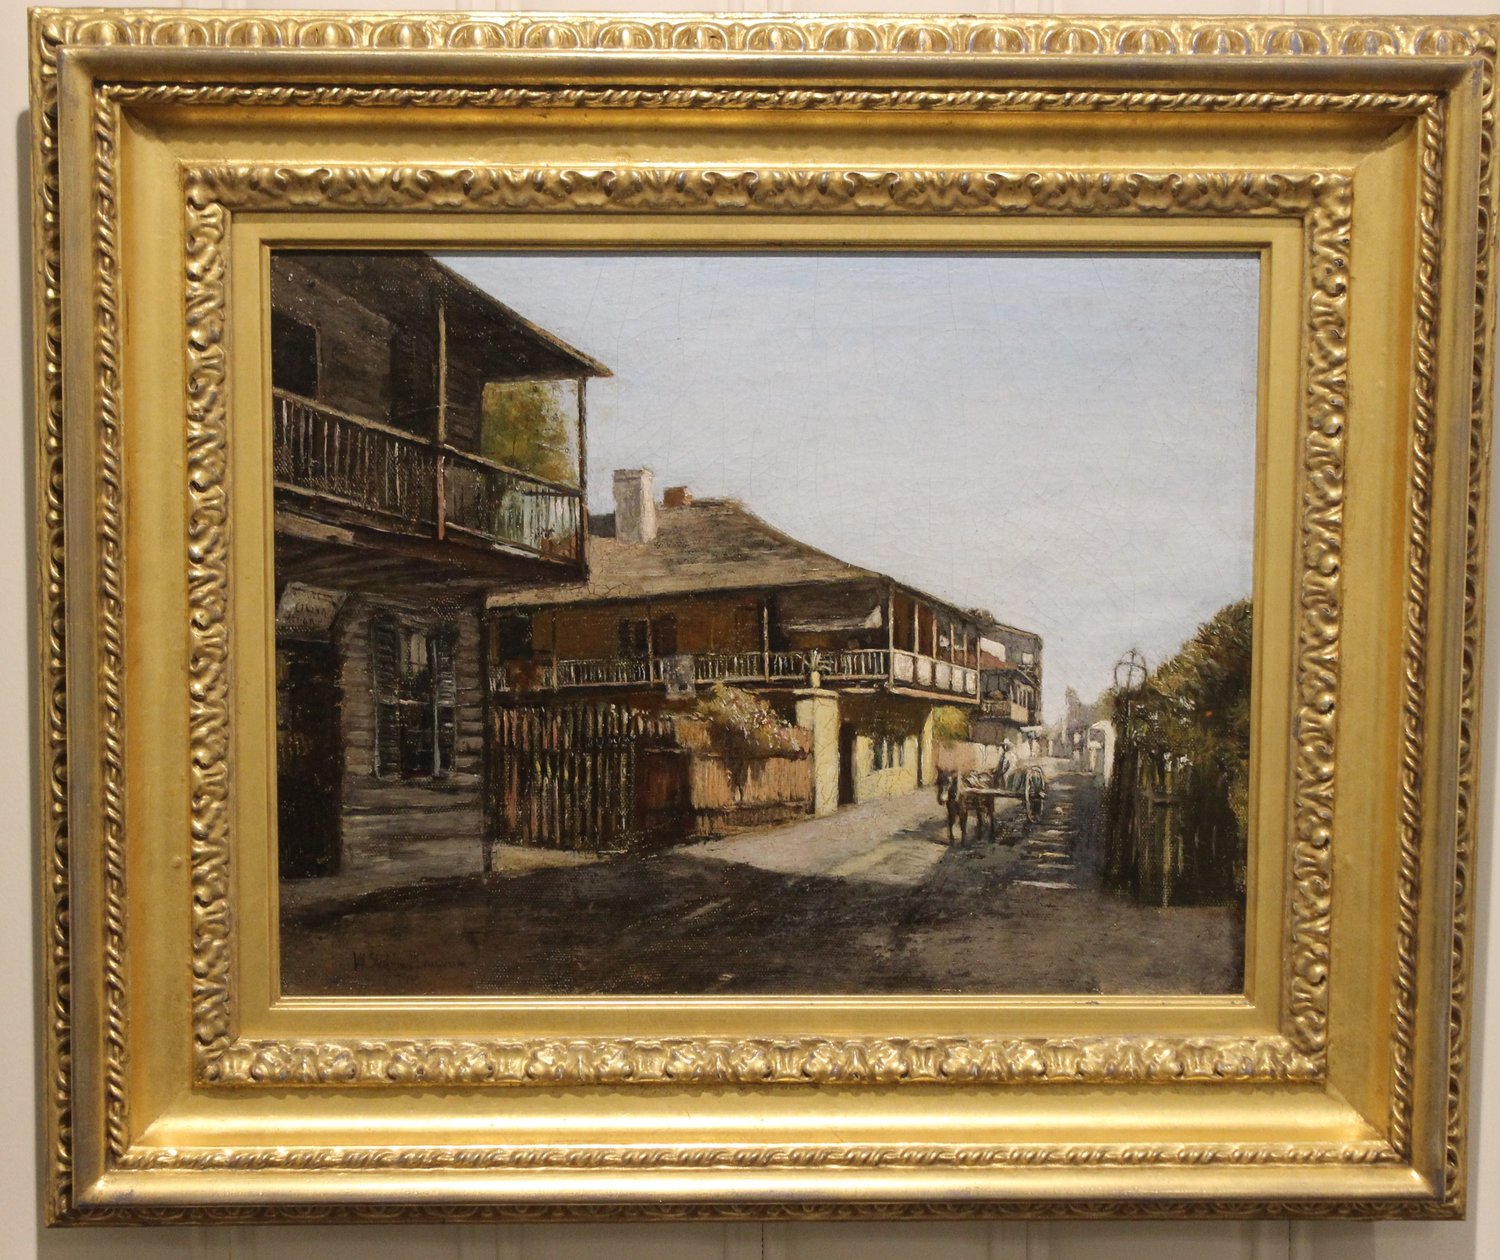 “St. George Street, St. Augustine” by William Staples Drown. 1890